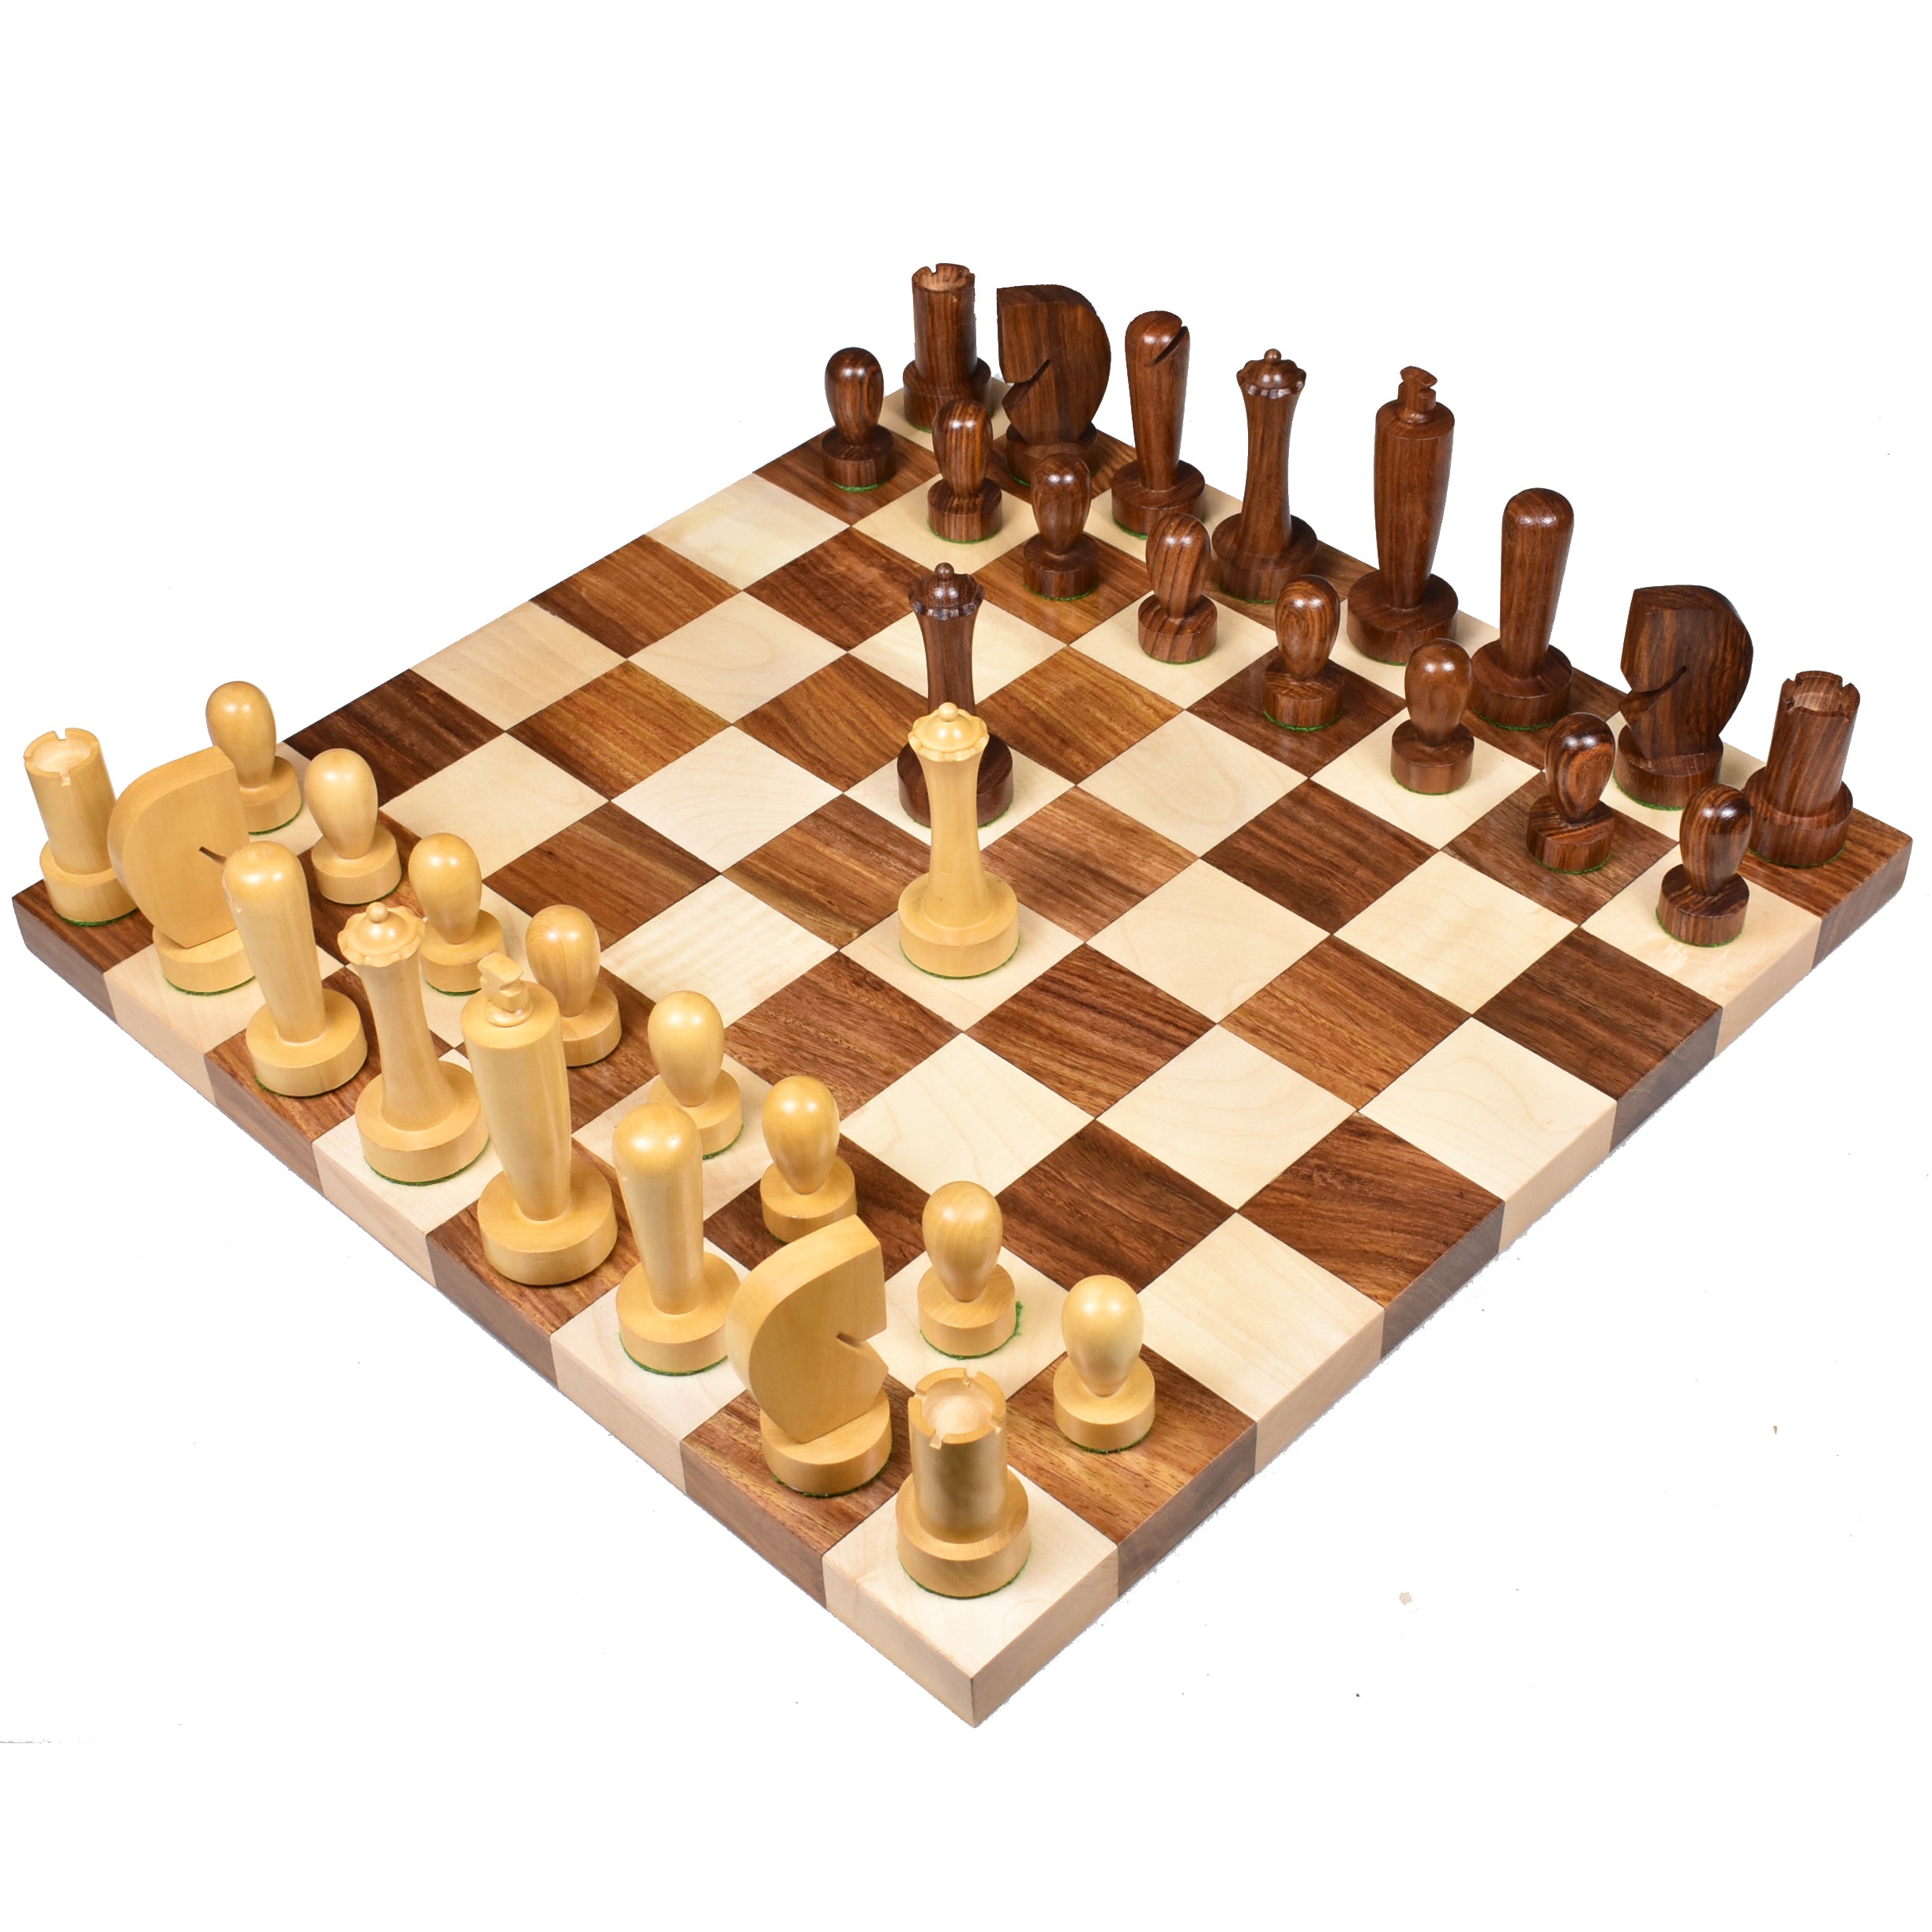 Berliner Modern Minimalist Chess Pieces Only set